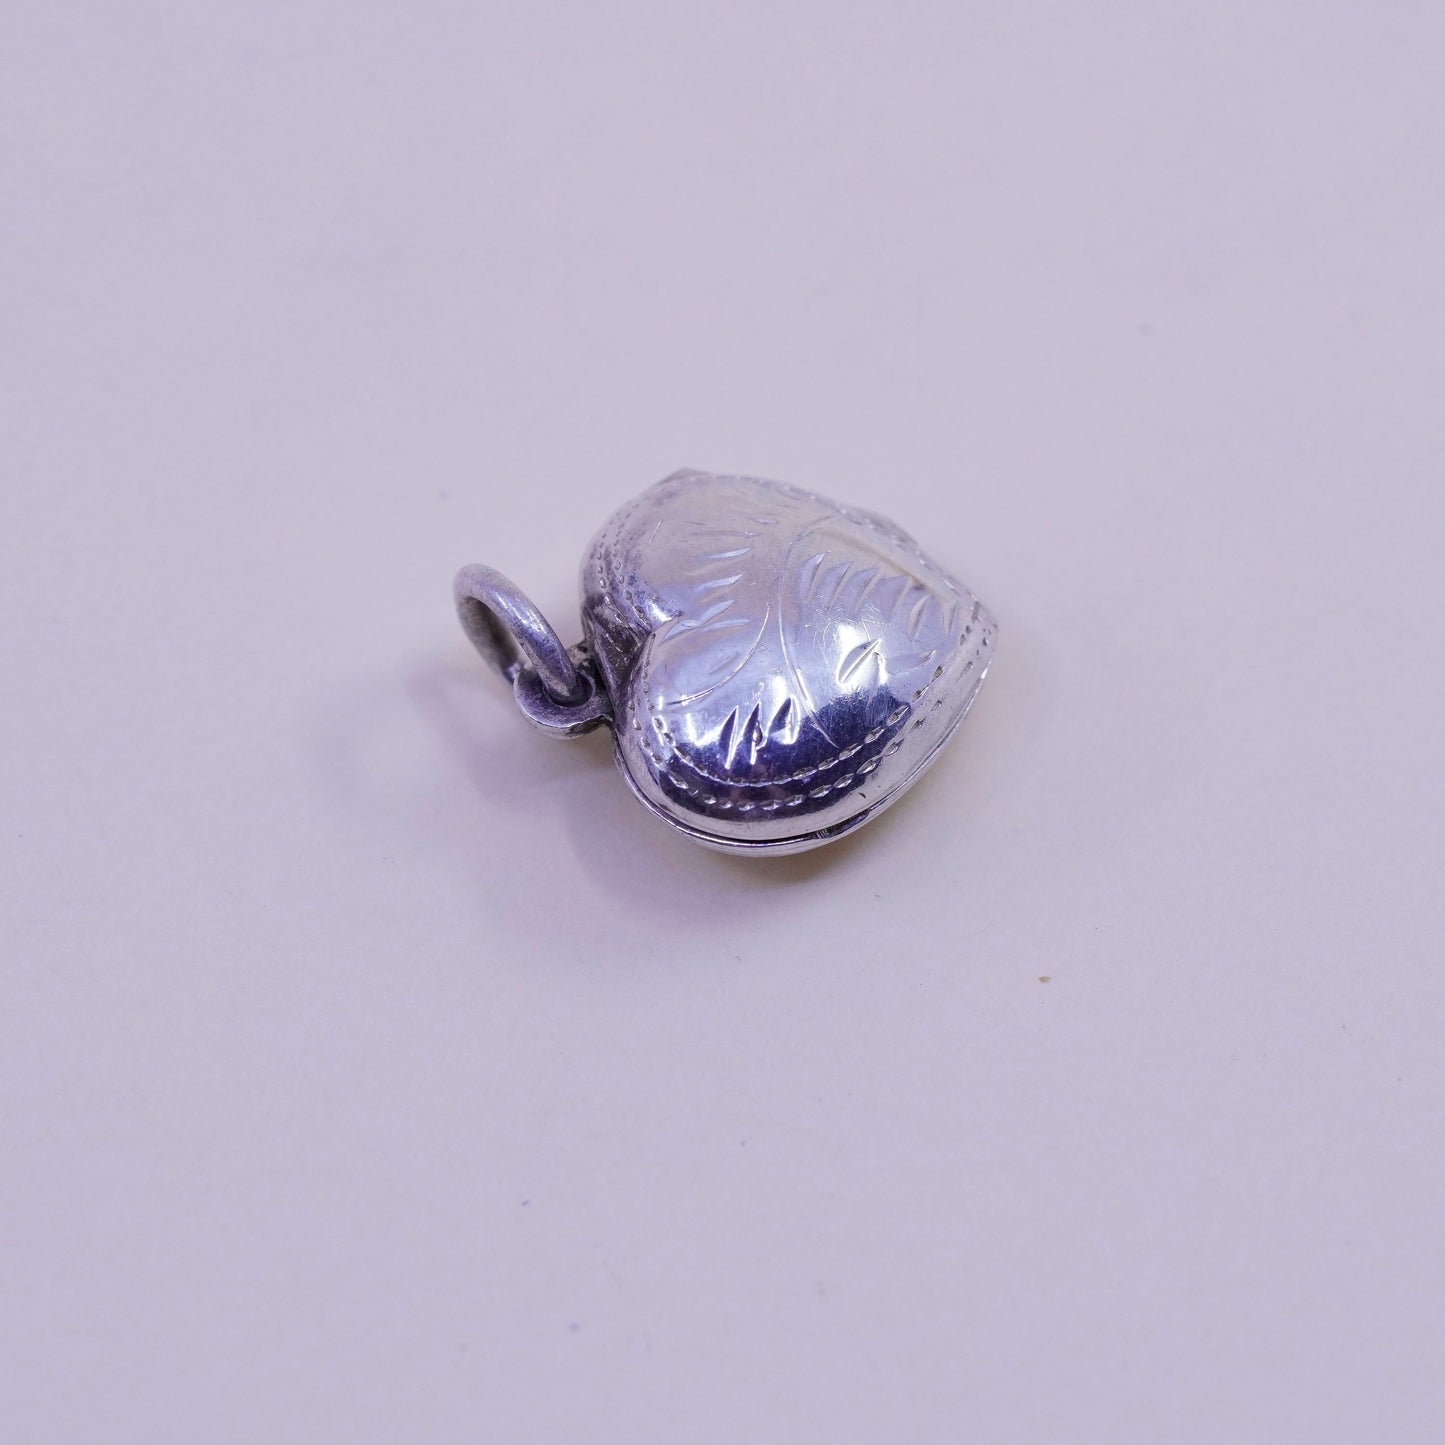 Vintage Sterling silver pendant, 925 textured handmade heart photo locket charm